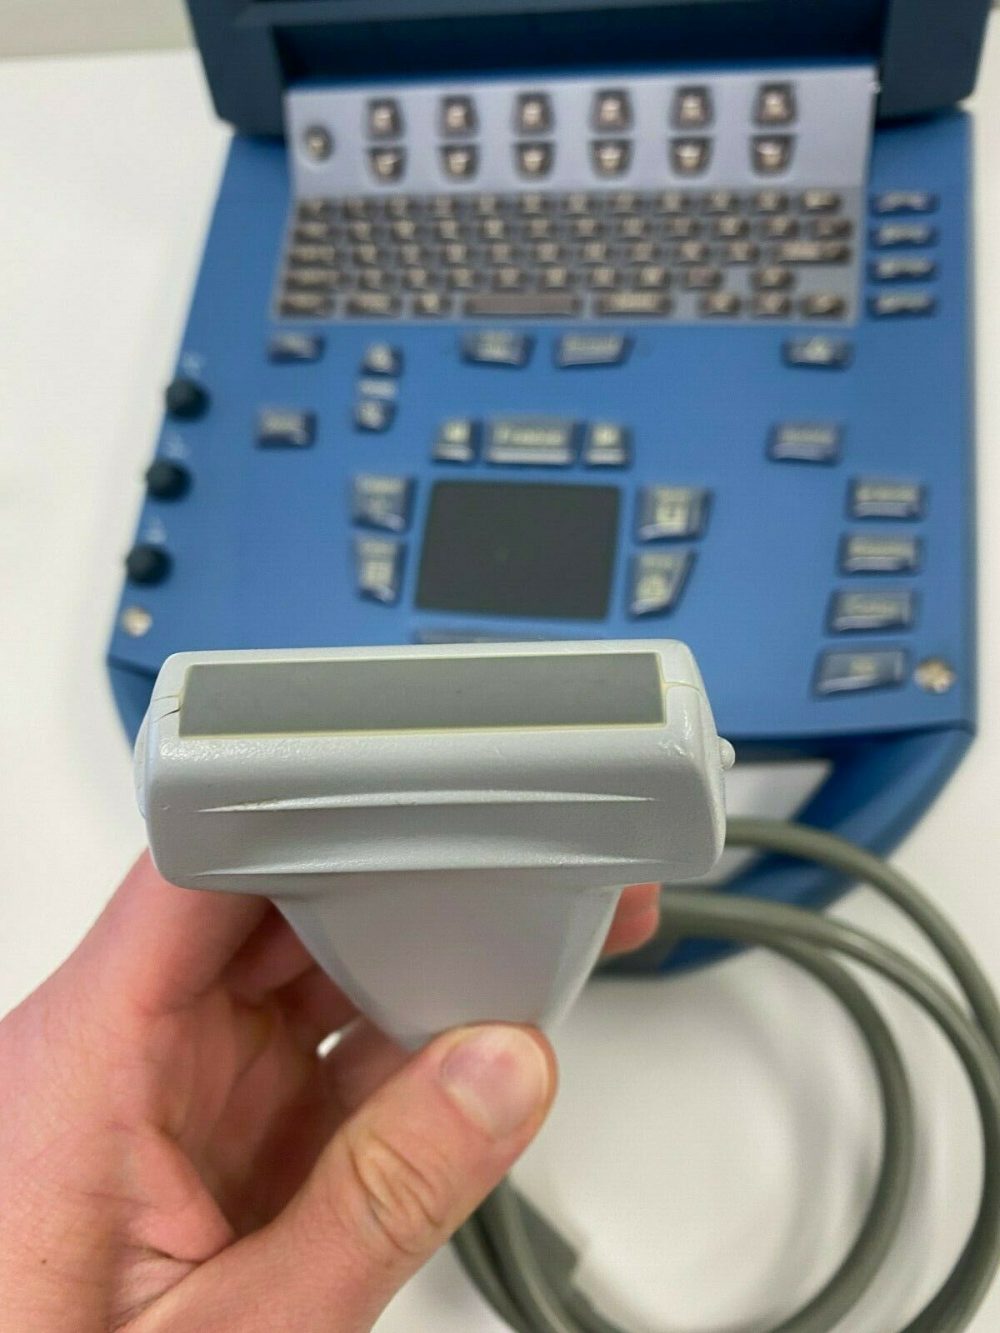 SonoSite MicroMaxx Ultrasound